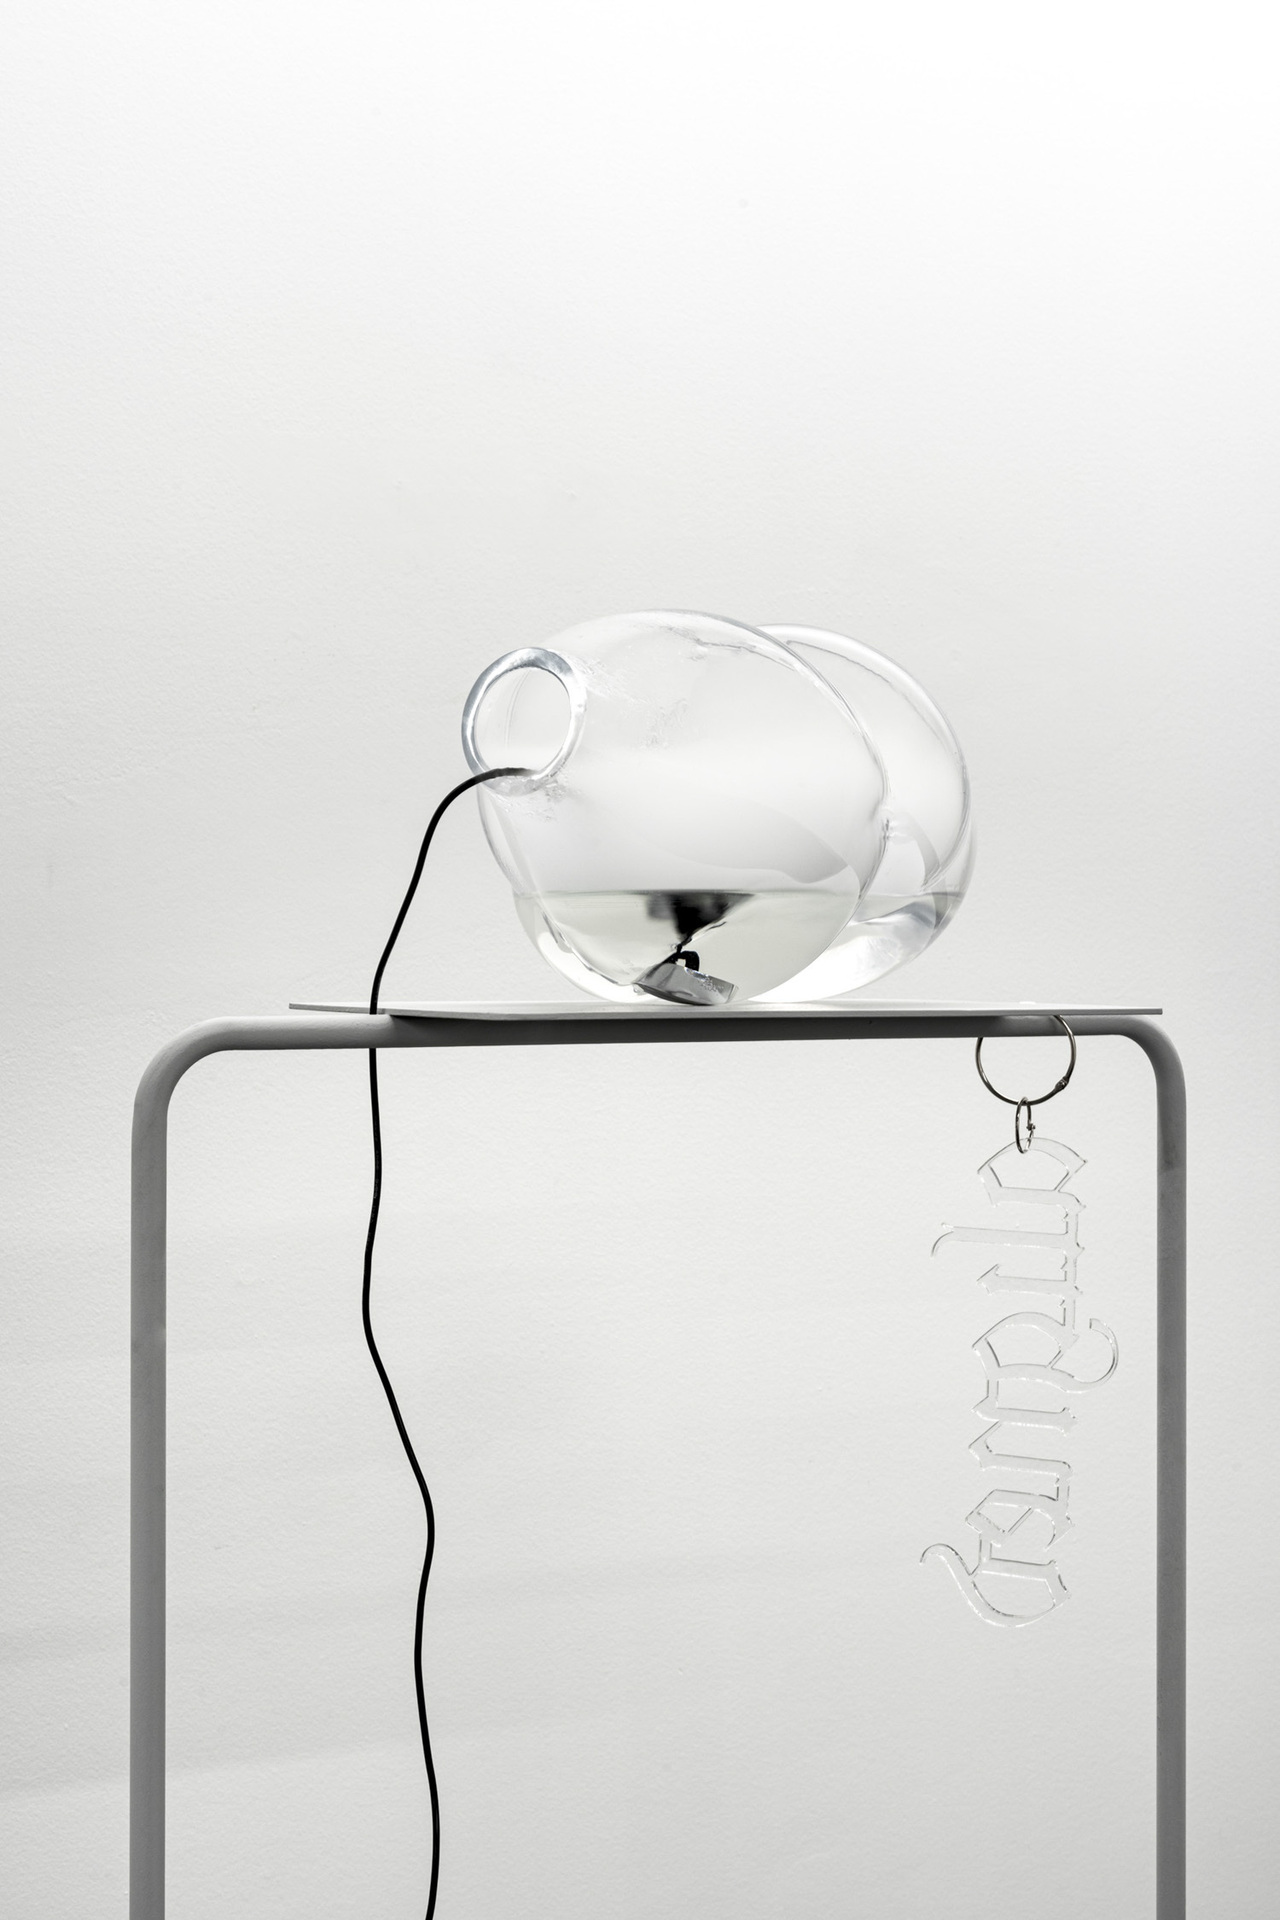 Christiane Peschek, Transition 2, 2022, Glass blowing, vaporizer, 22 x 34 x 19 cm, SANATORIUM, Istanbul